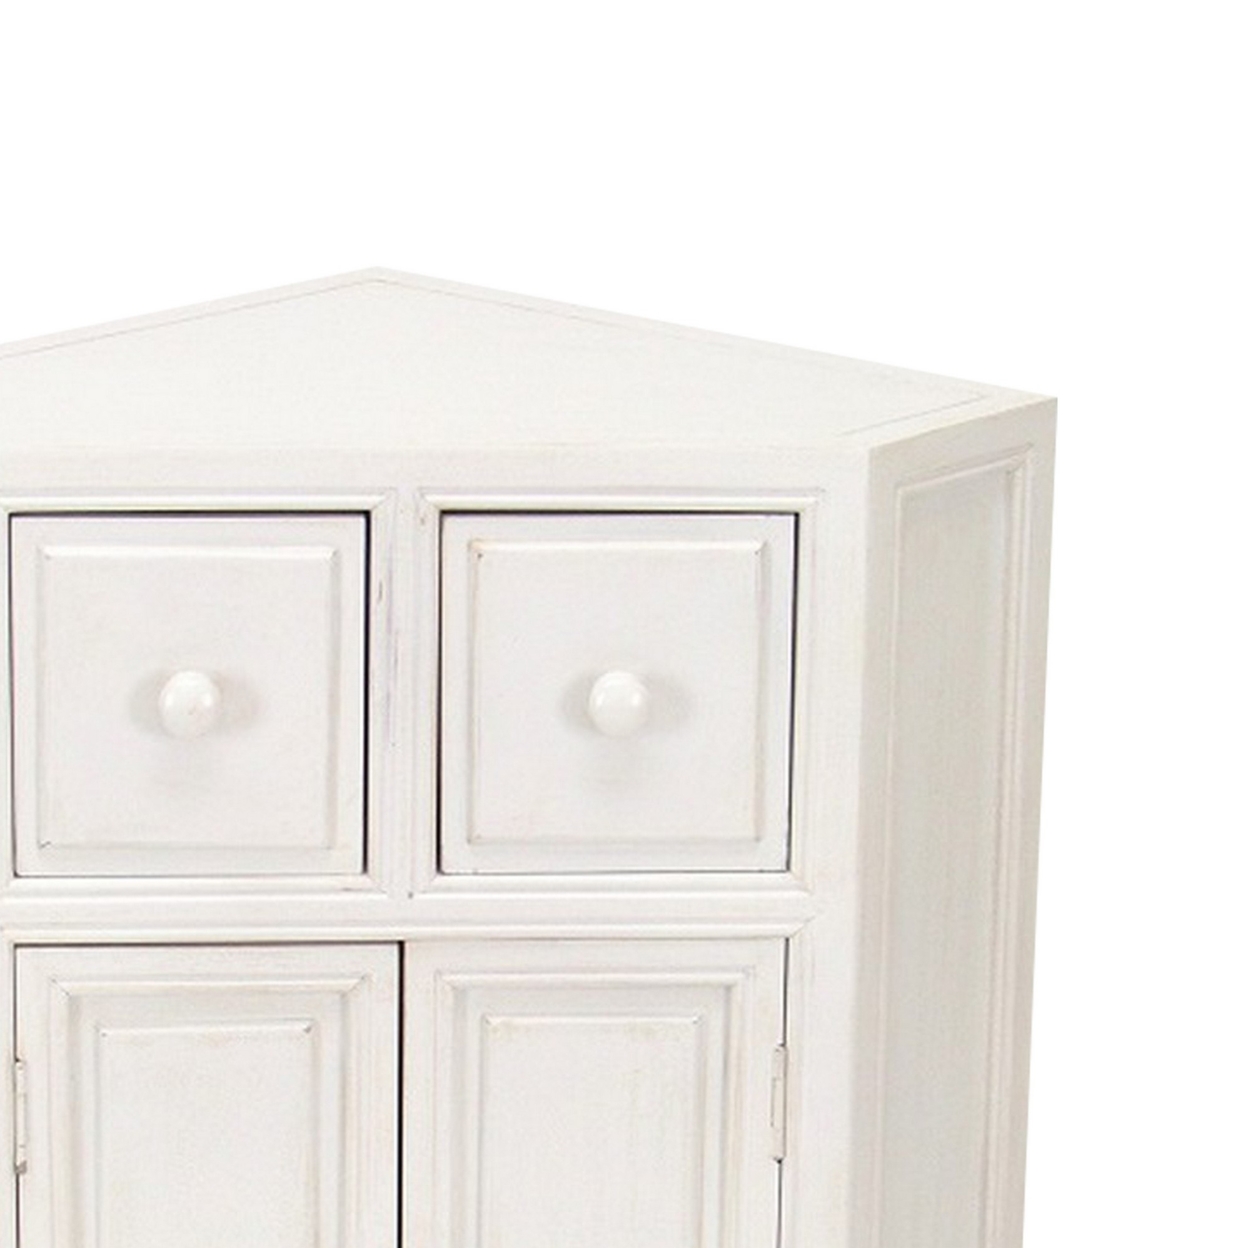 Wooden Corner Cabinet With 2 Drawers And 2 Doors, White- Saltoro Sherpi